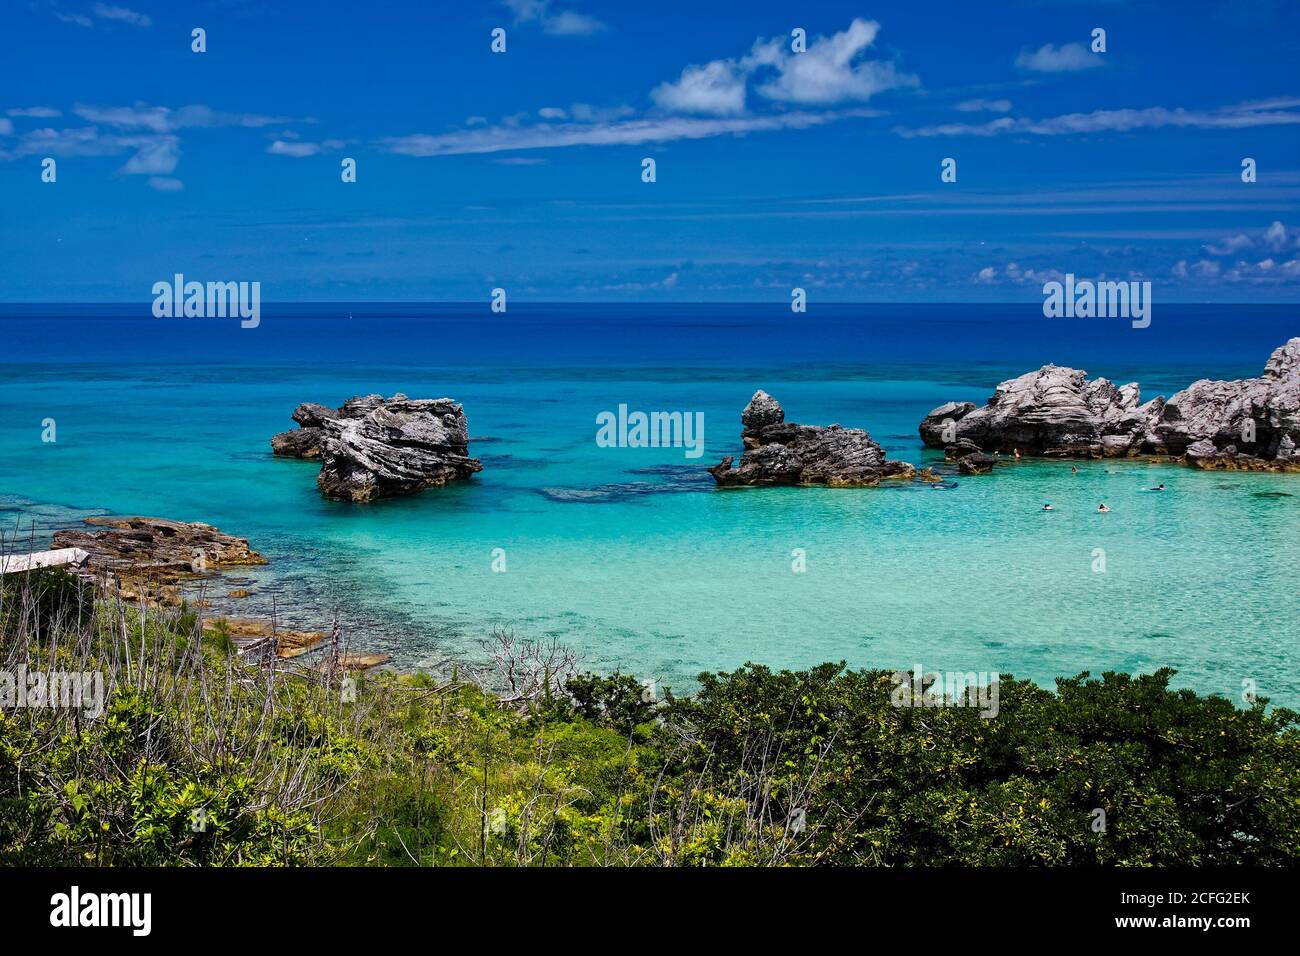 water scene, people snorkeling, varied blue shades, rock formations, vegetation, Tobacco Bay; St. George, Bermuda Stock Photo